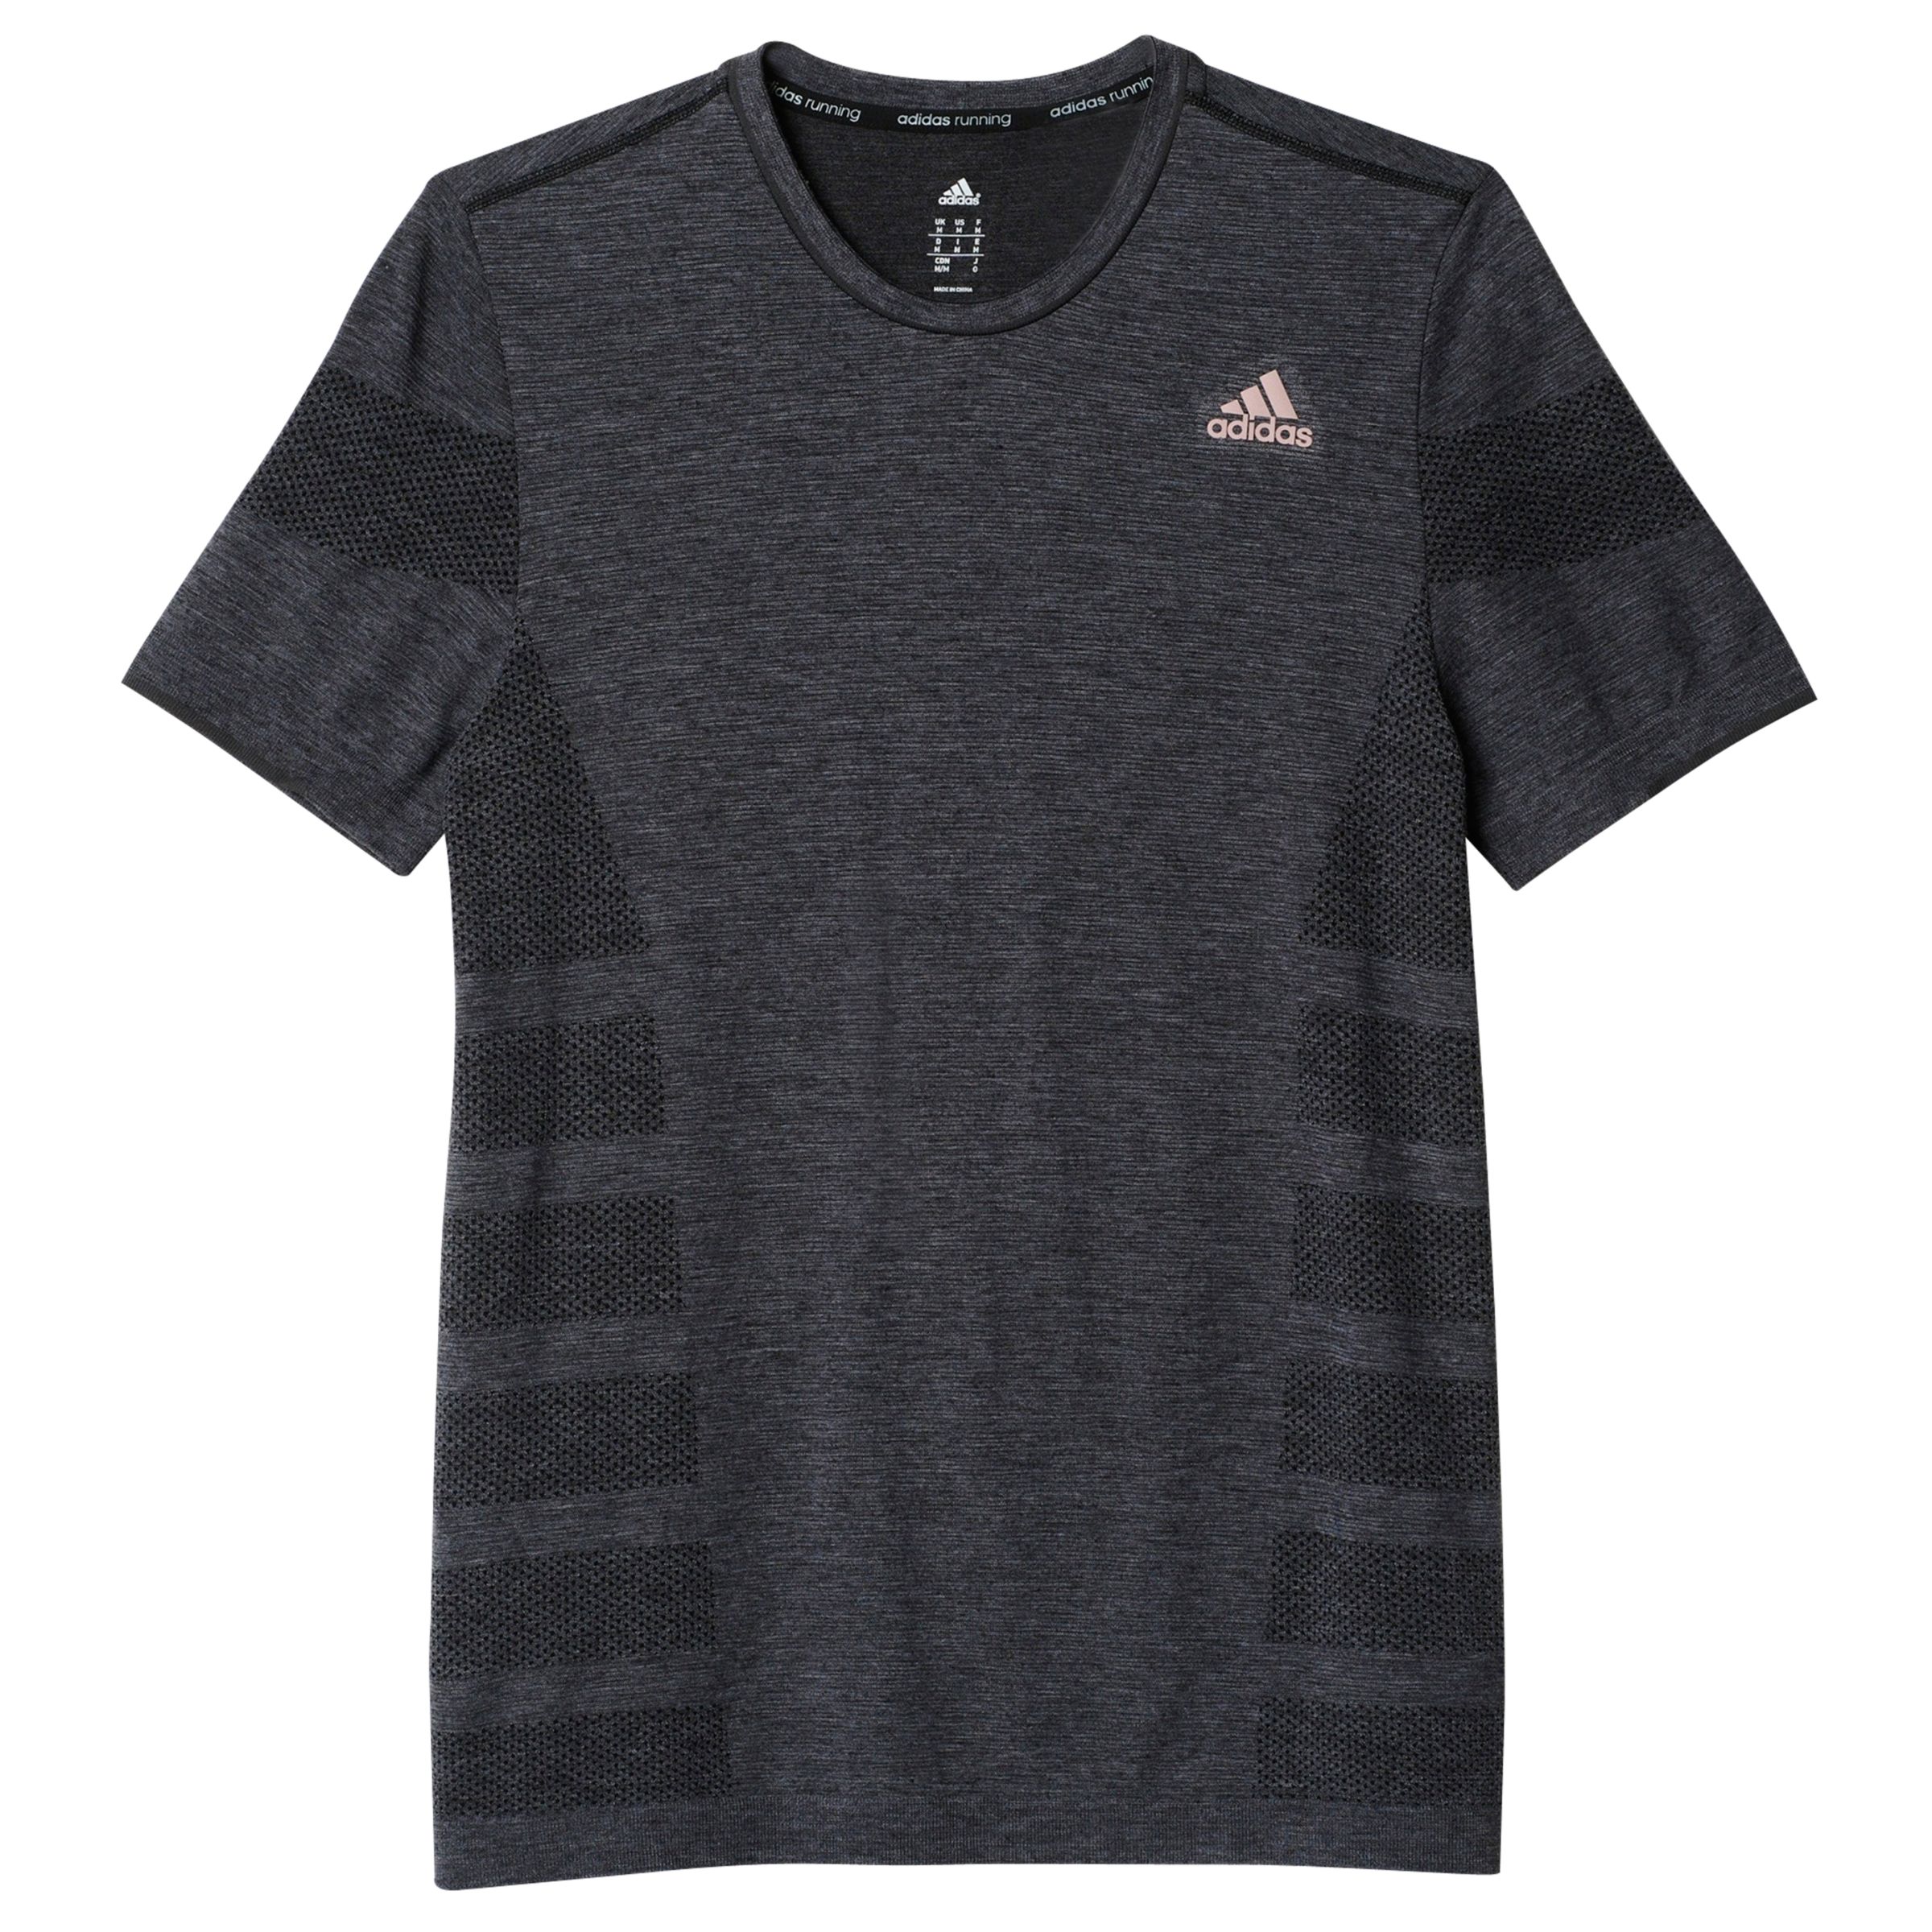 Adidas Primeknit Wool Running T-Shirt 